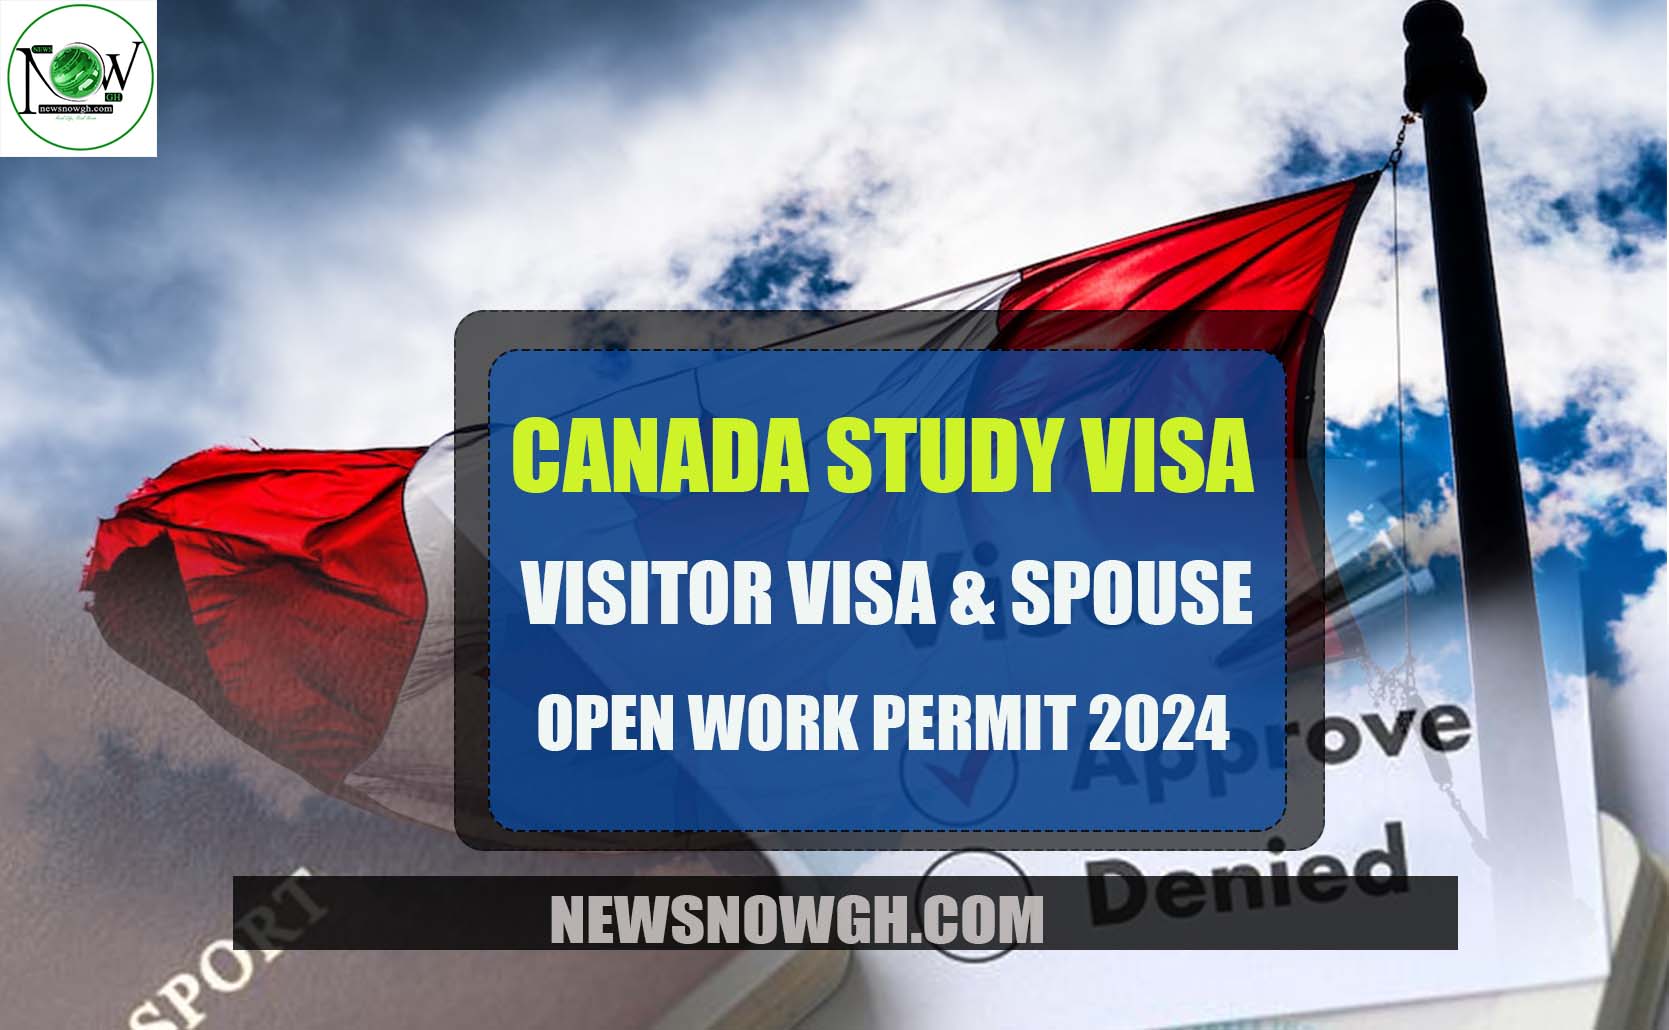 Canada Study Visa, Visitor Visa & Spouse Open Work Permit 2024